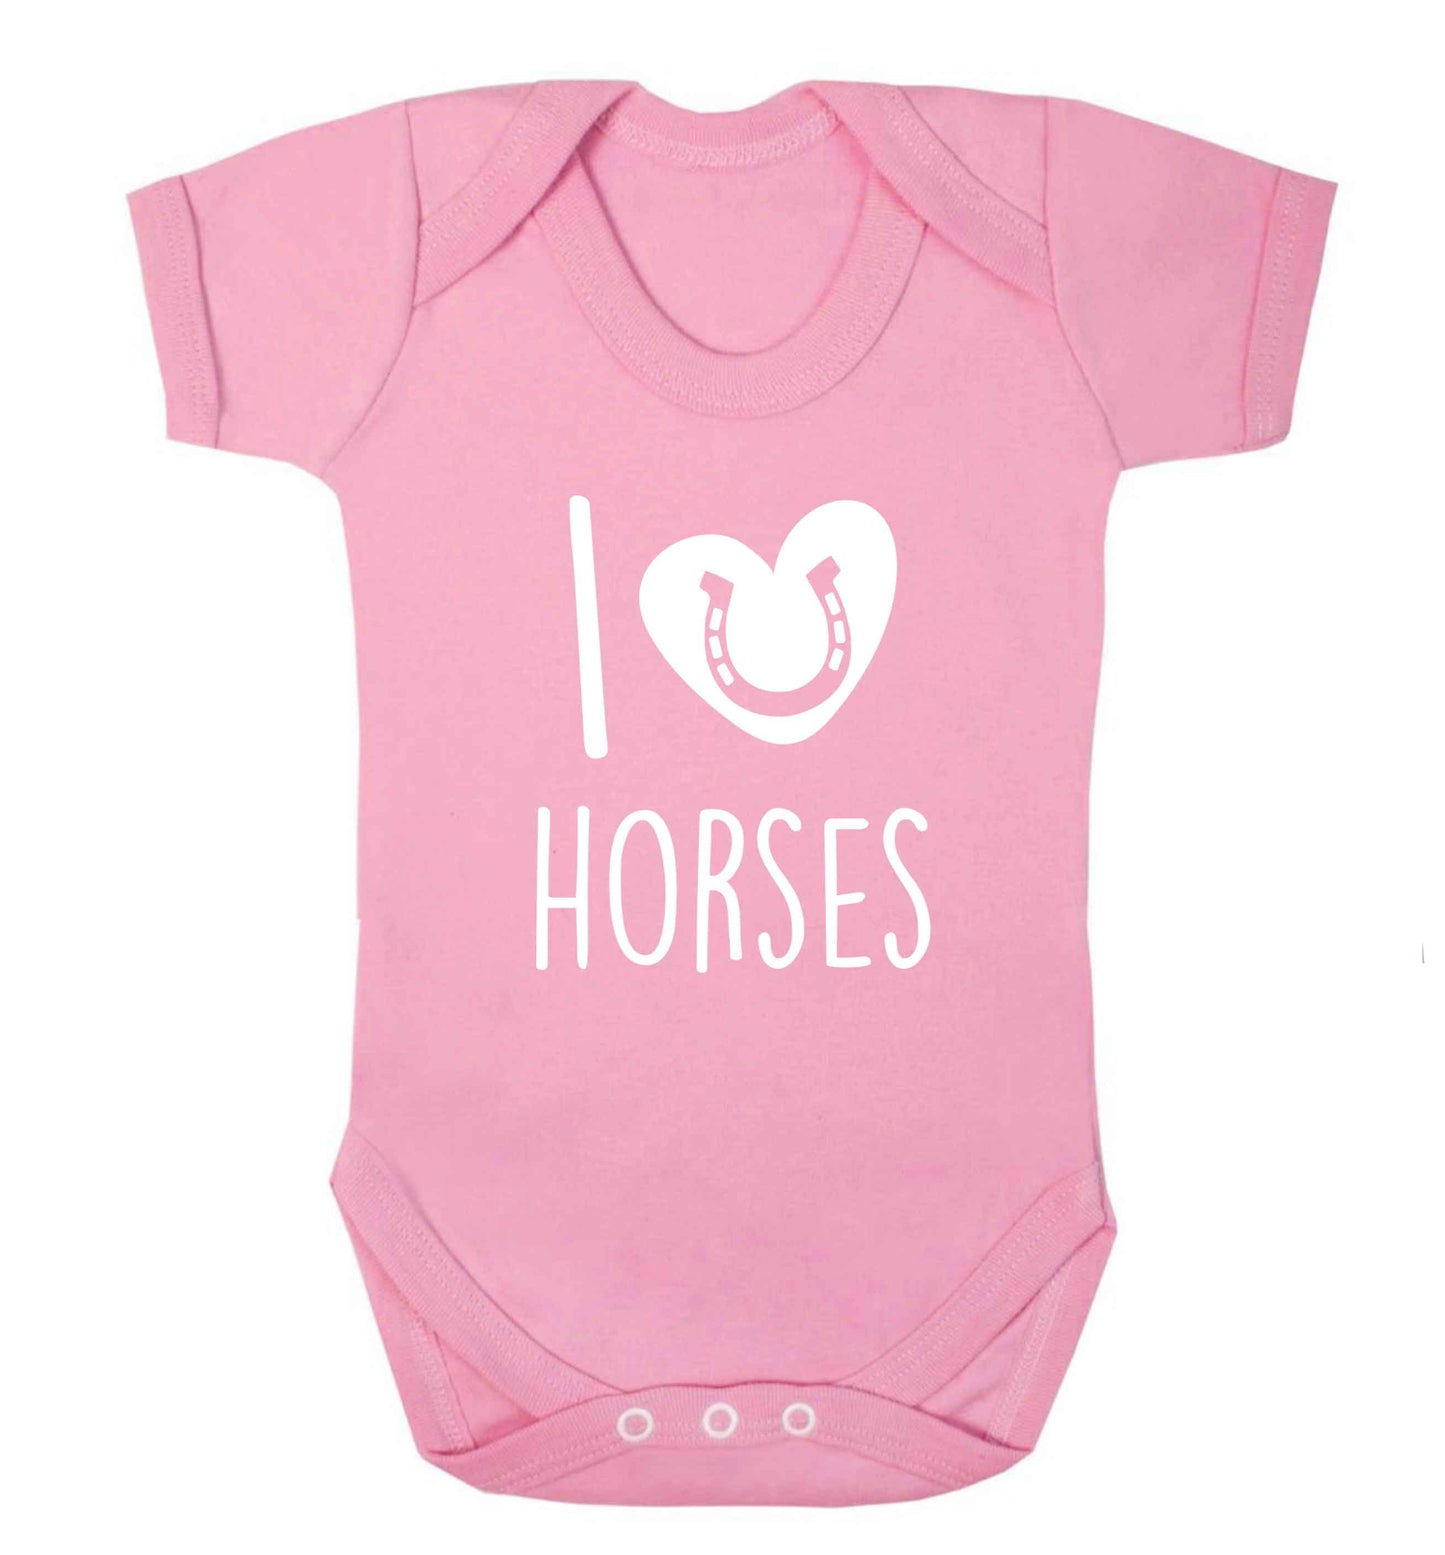 I love horses baby vest pale pink 18-24 months